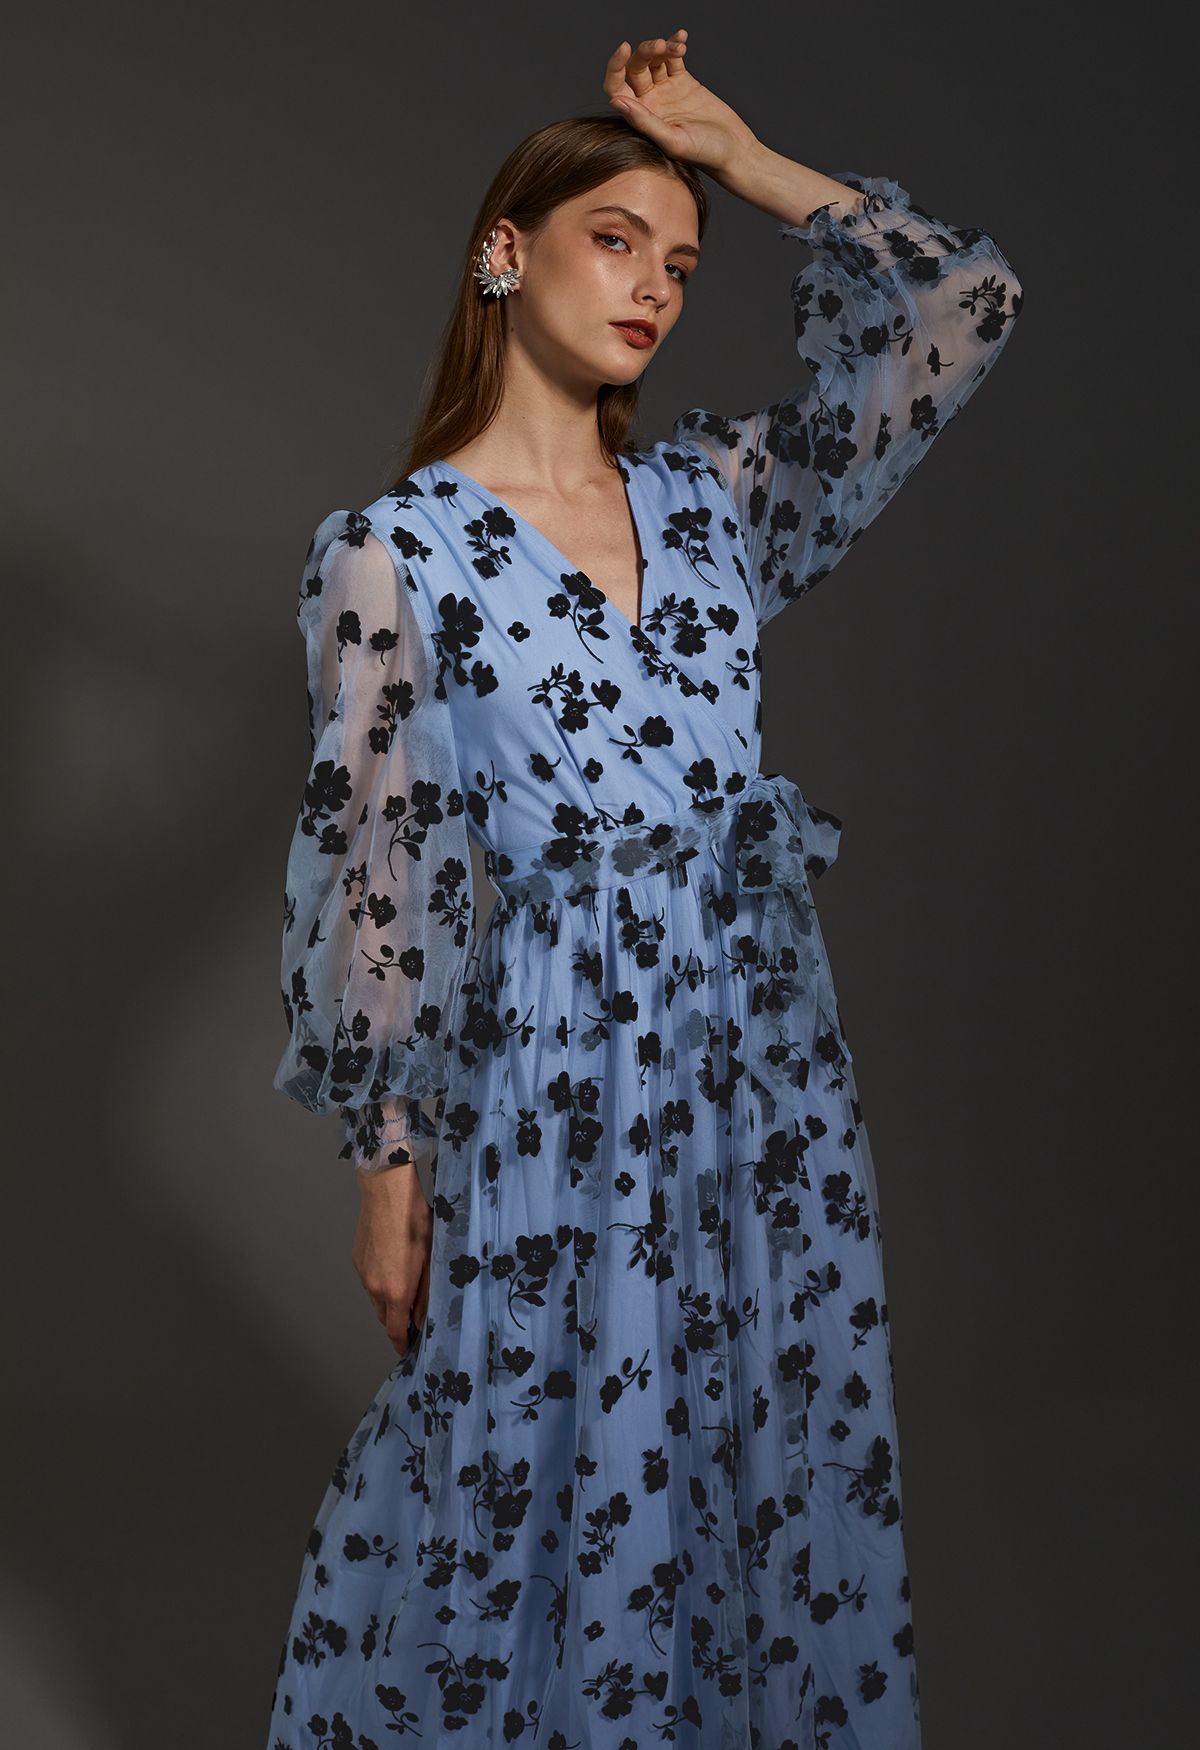 3D Posy Mesh Wrap Maxi Dress in Blue - Retro, Indie and Unique Fashion